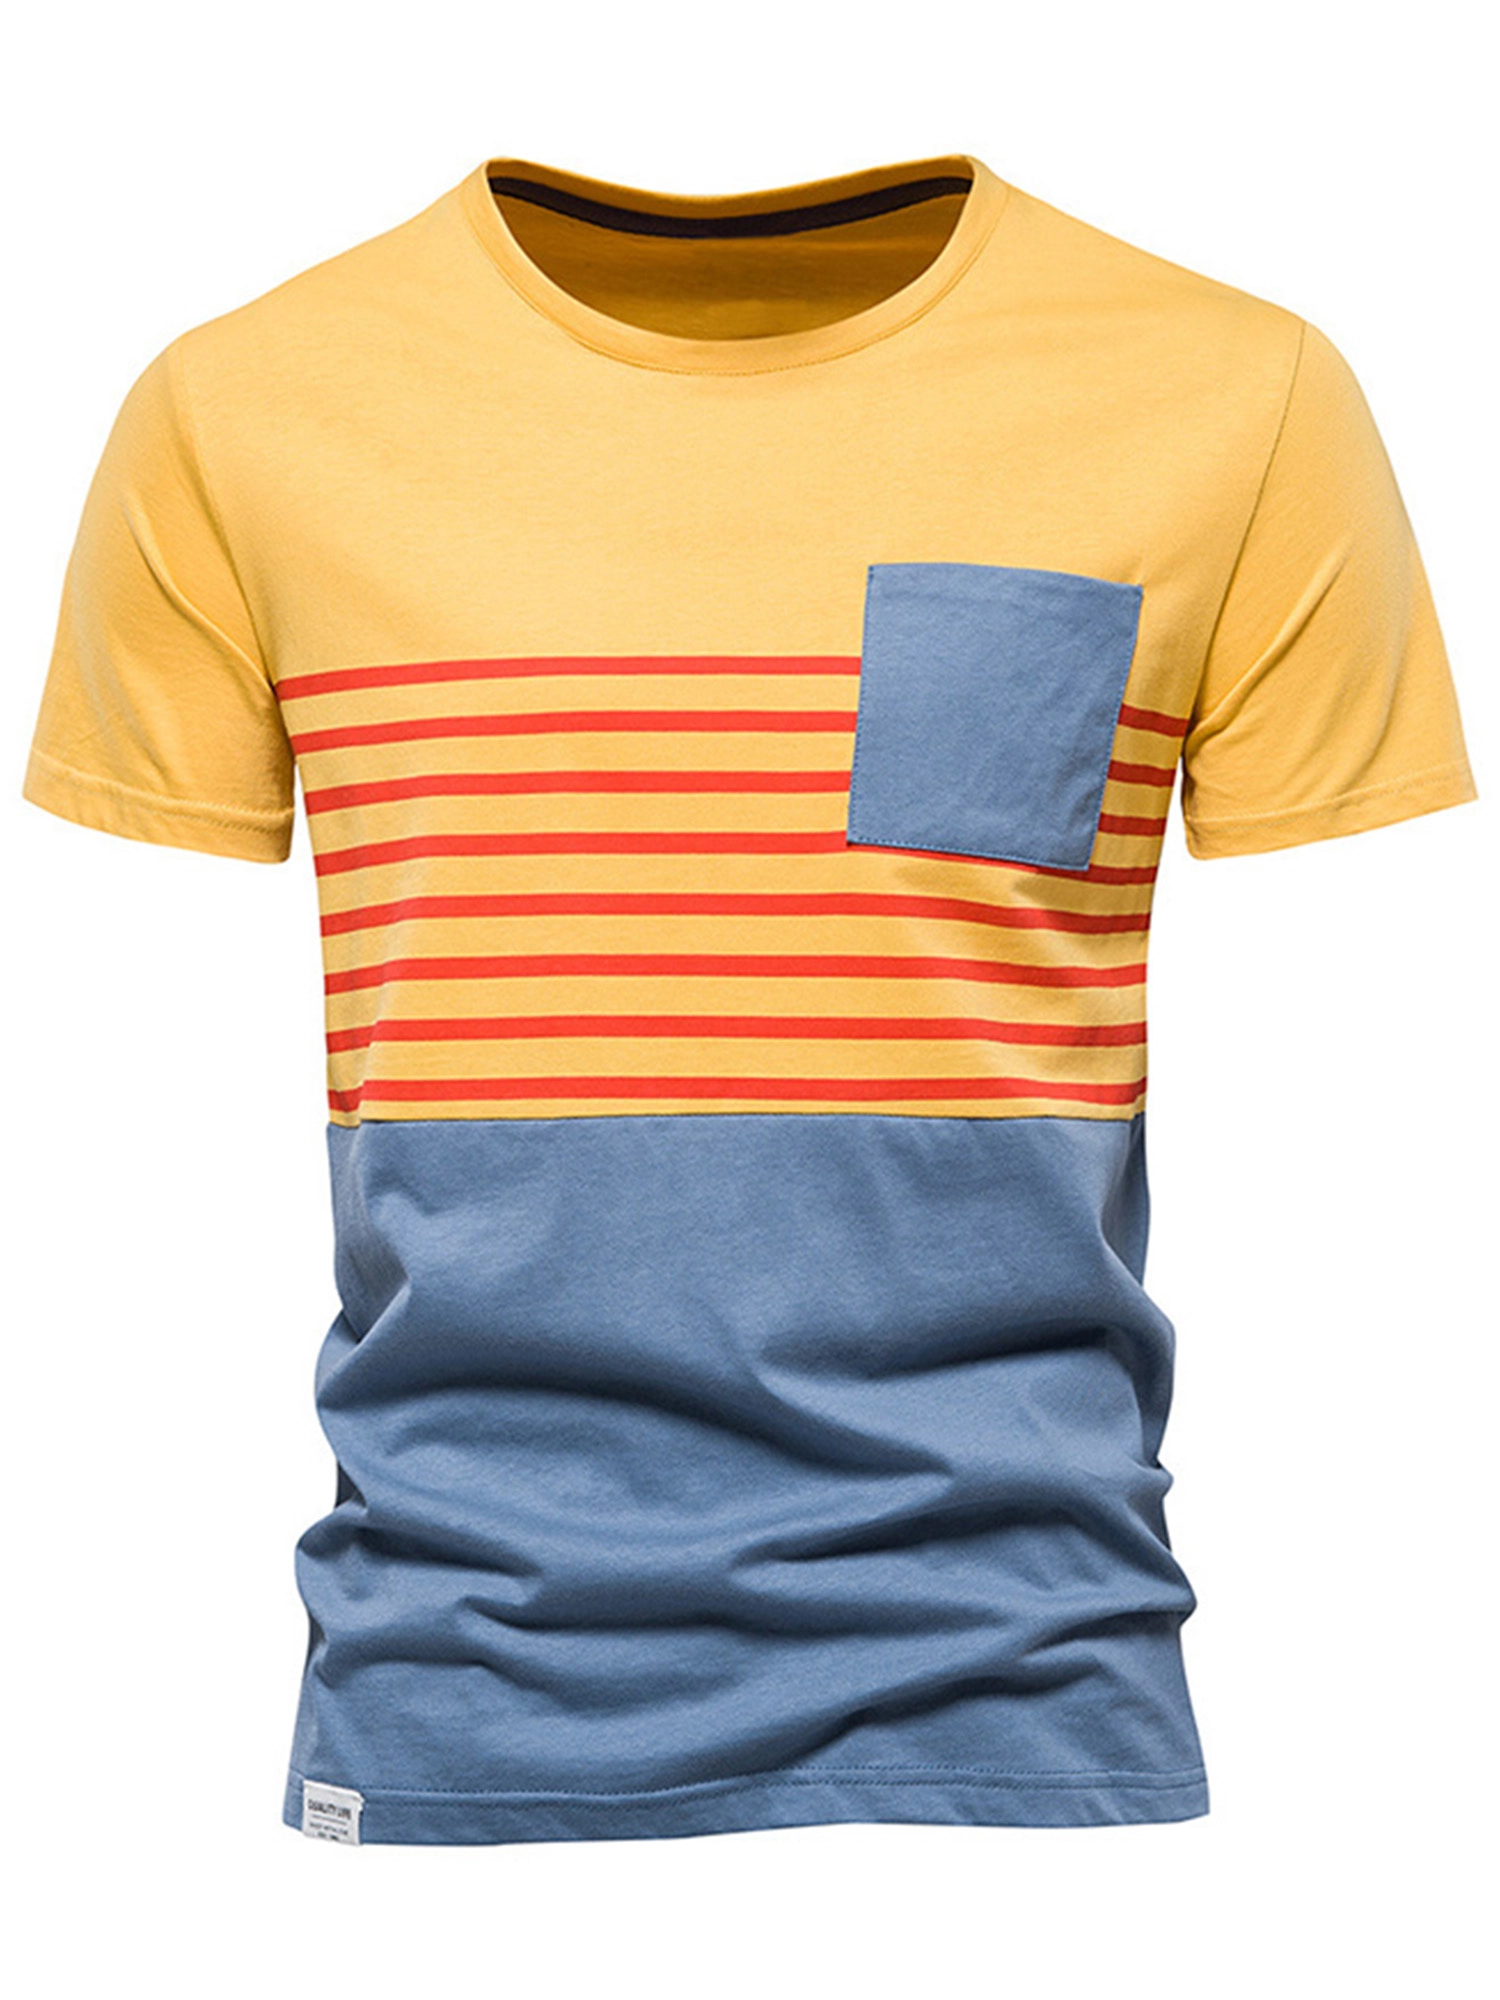 Men Casual Short Sleeve Tops Lightweight Pocket Striped Print Tee Shirt Contrast Color Summer T Shirt